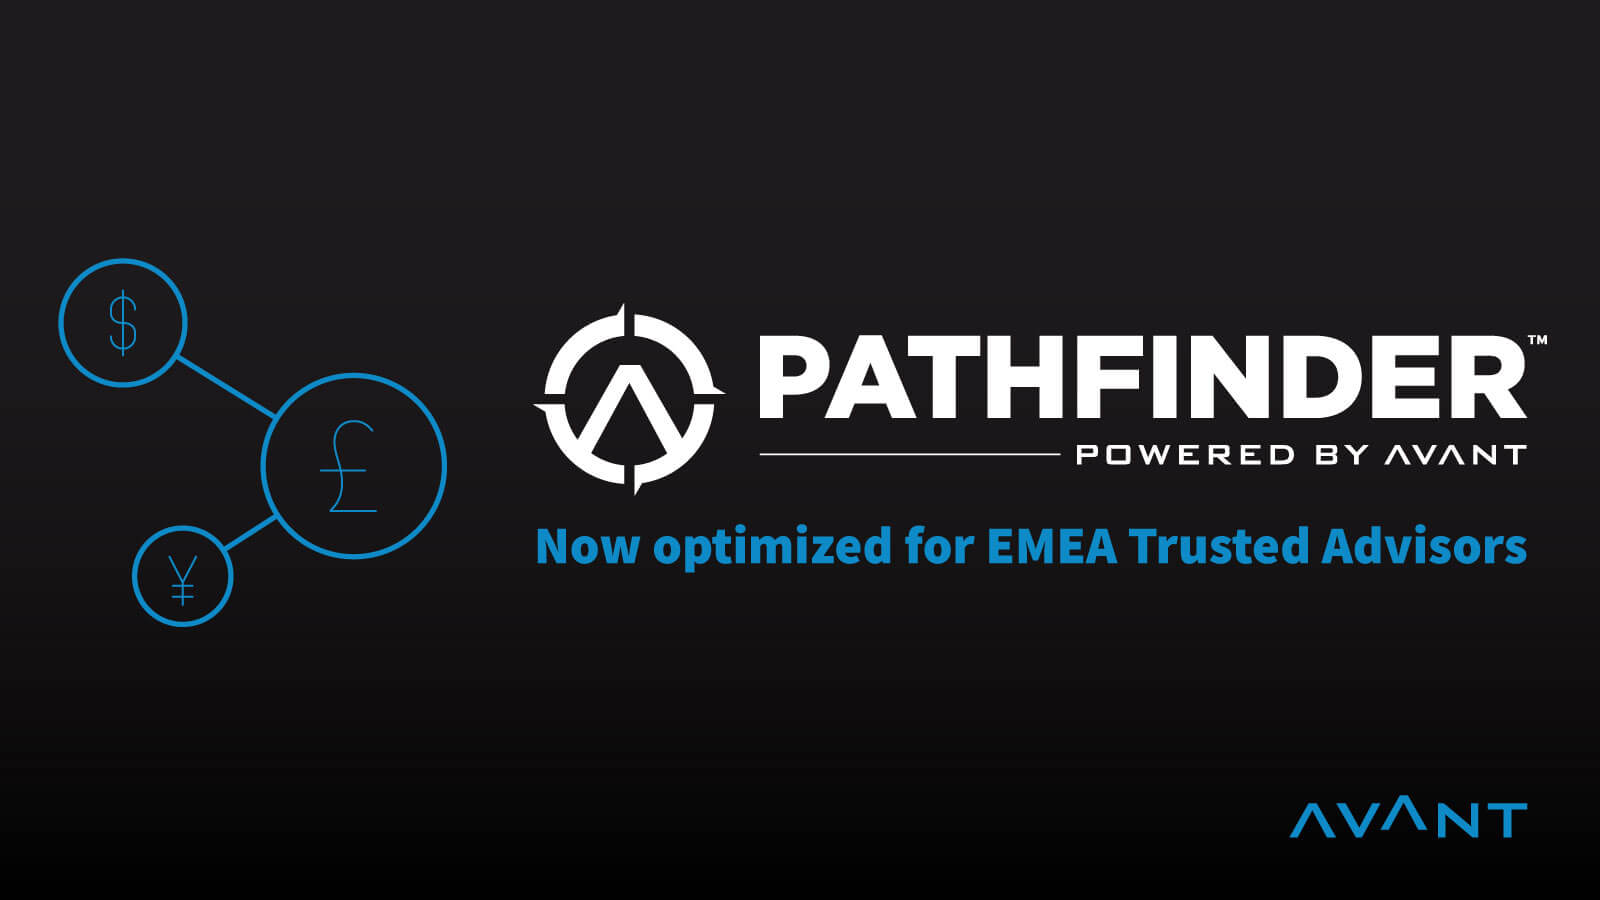 AVANT Optimizes Pathfinder for EMEA